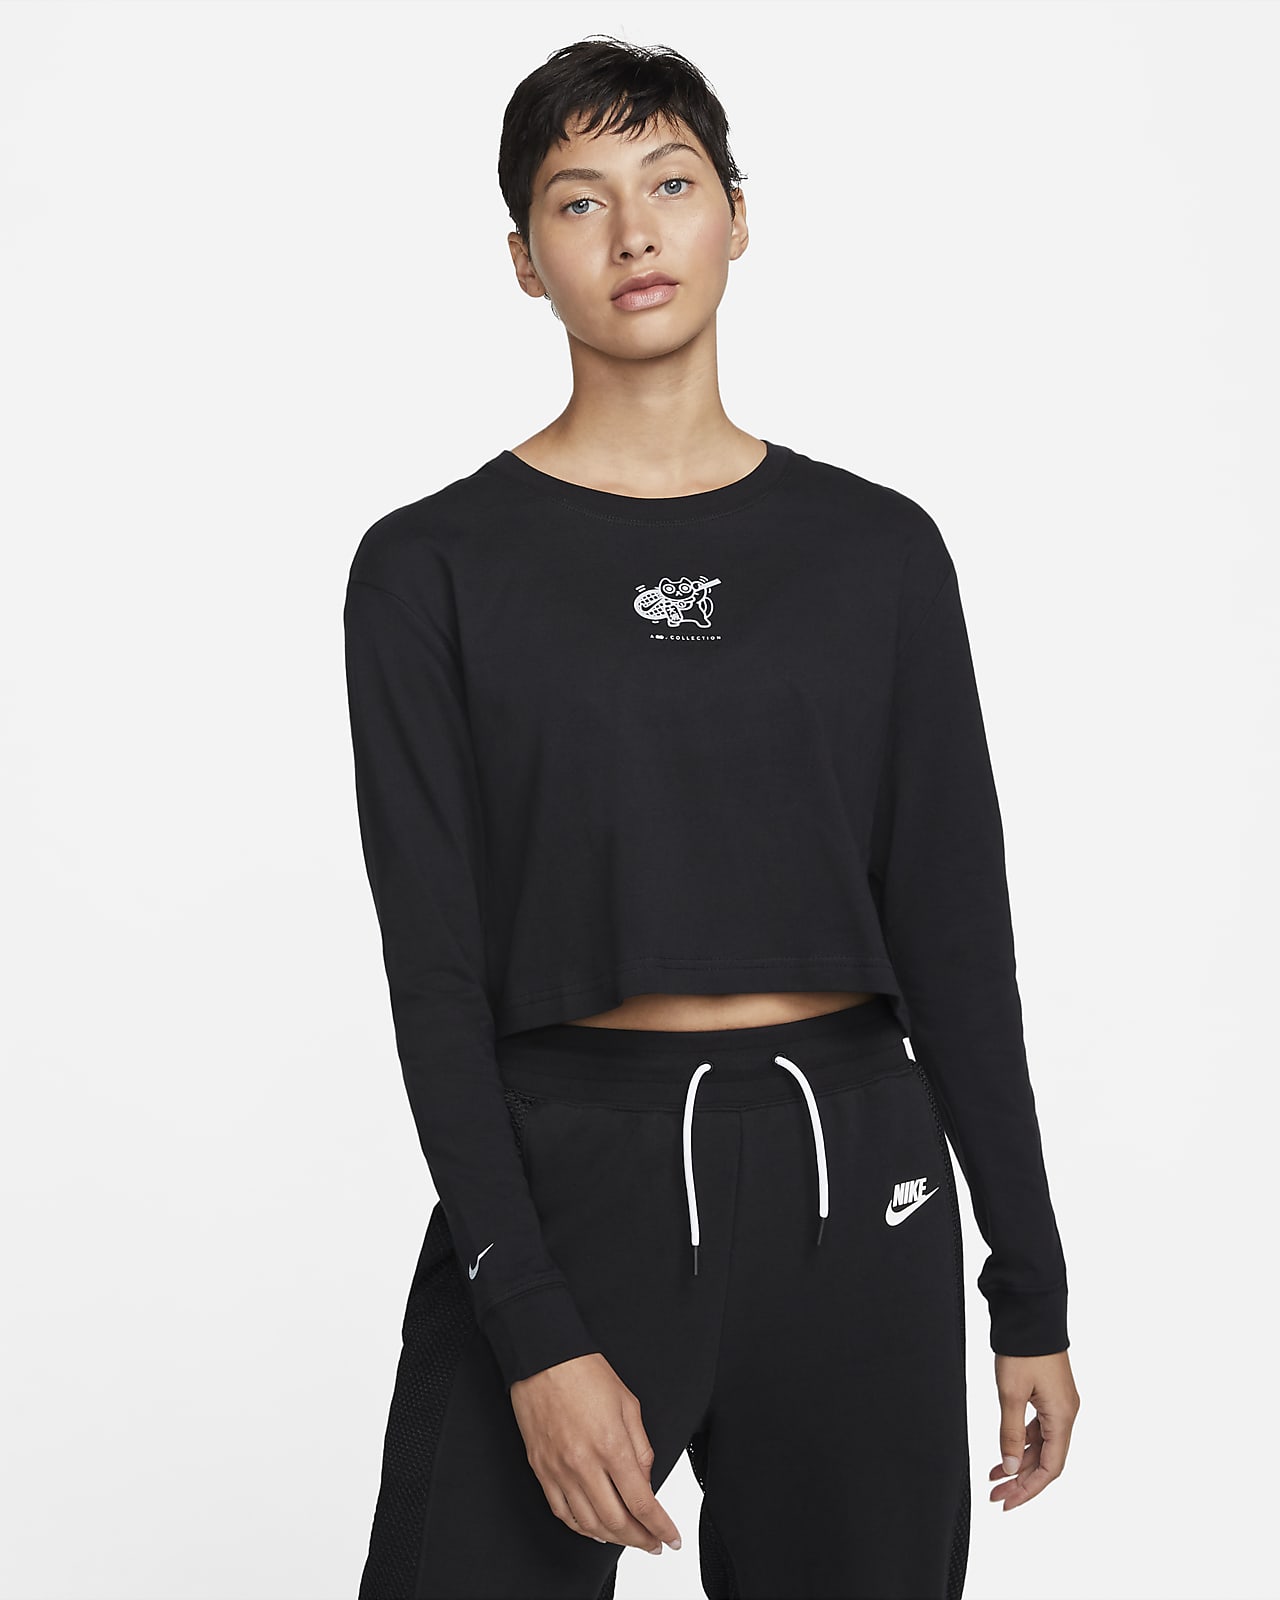 Naomi Osaka Women's Long-Sleeve Cropped T-Shirt. Nike GB